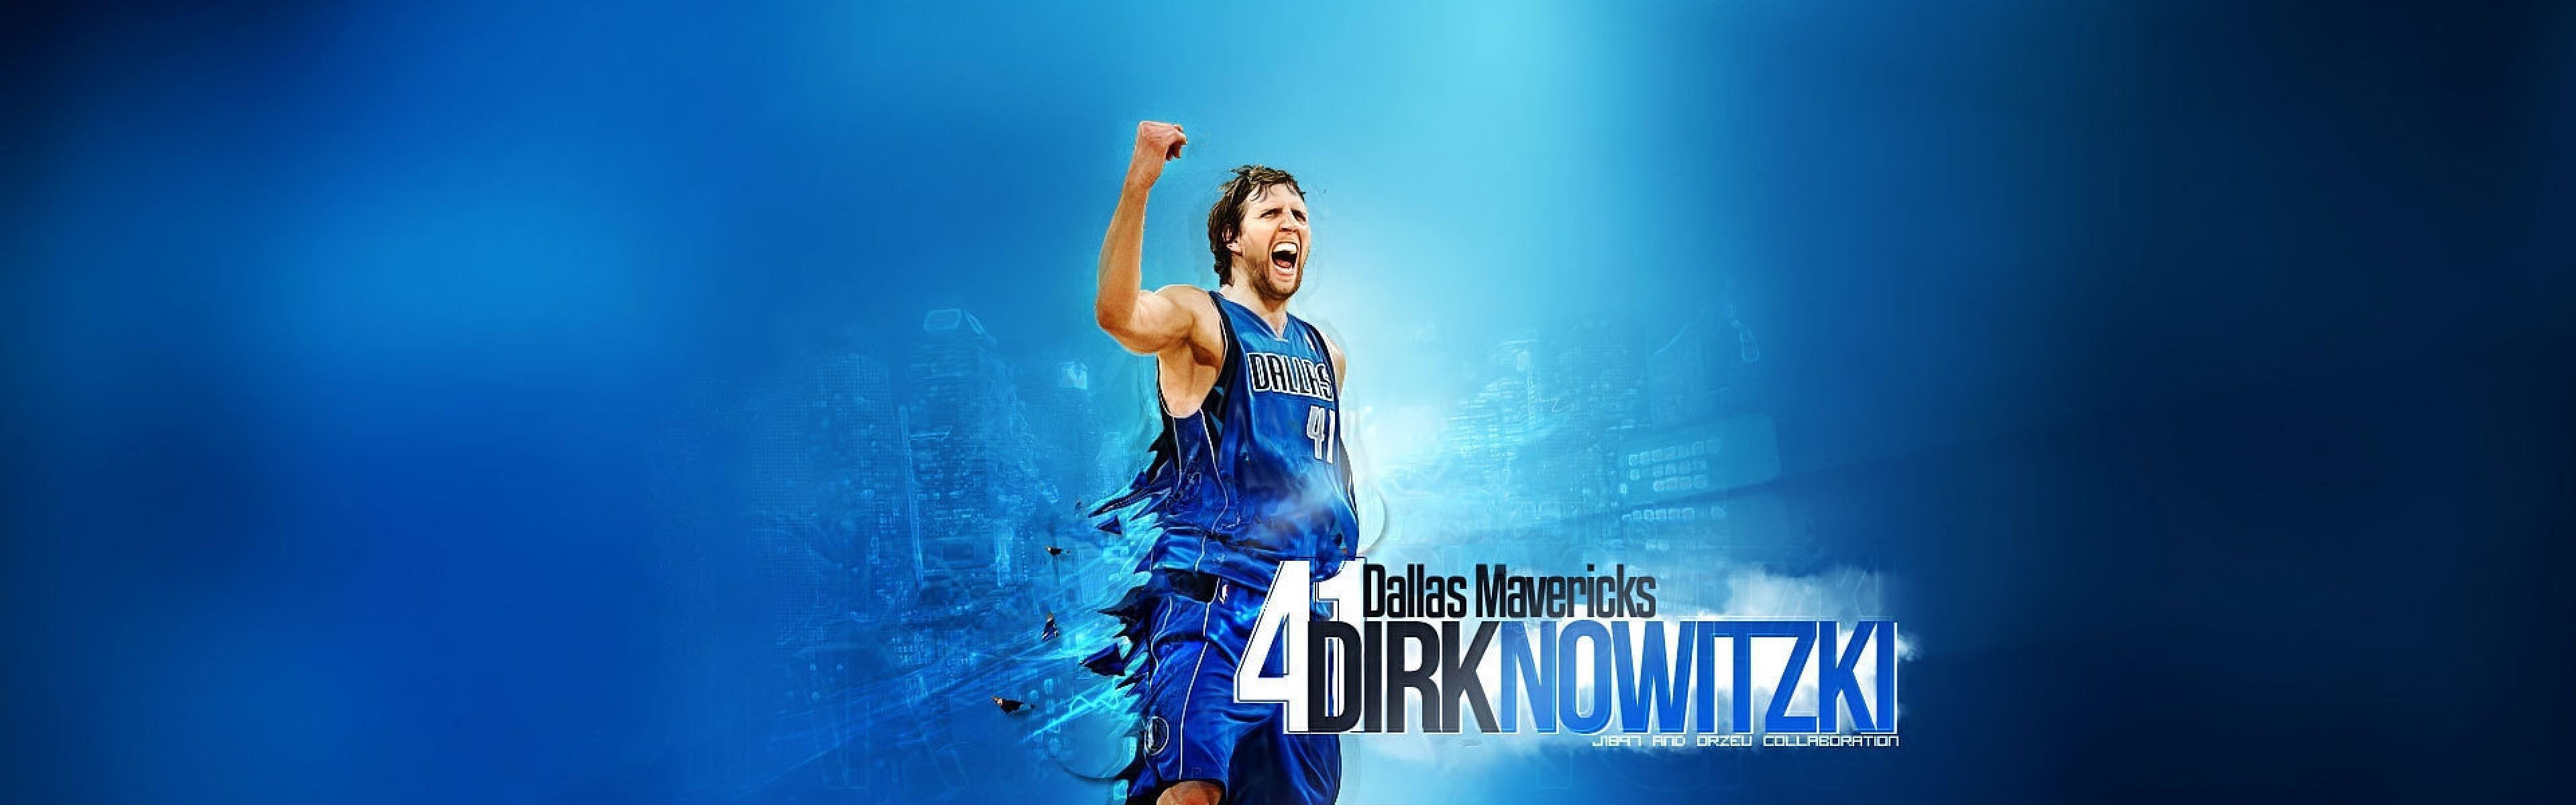 Download Wallpaper 3840x1200 Dirk nowitzki, Basketball player